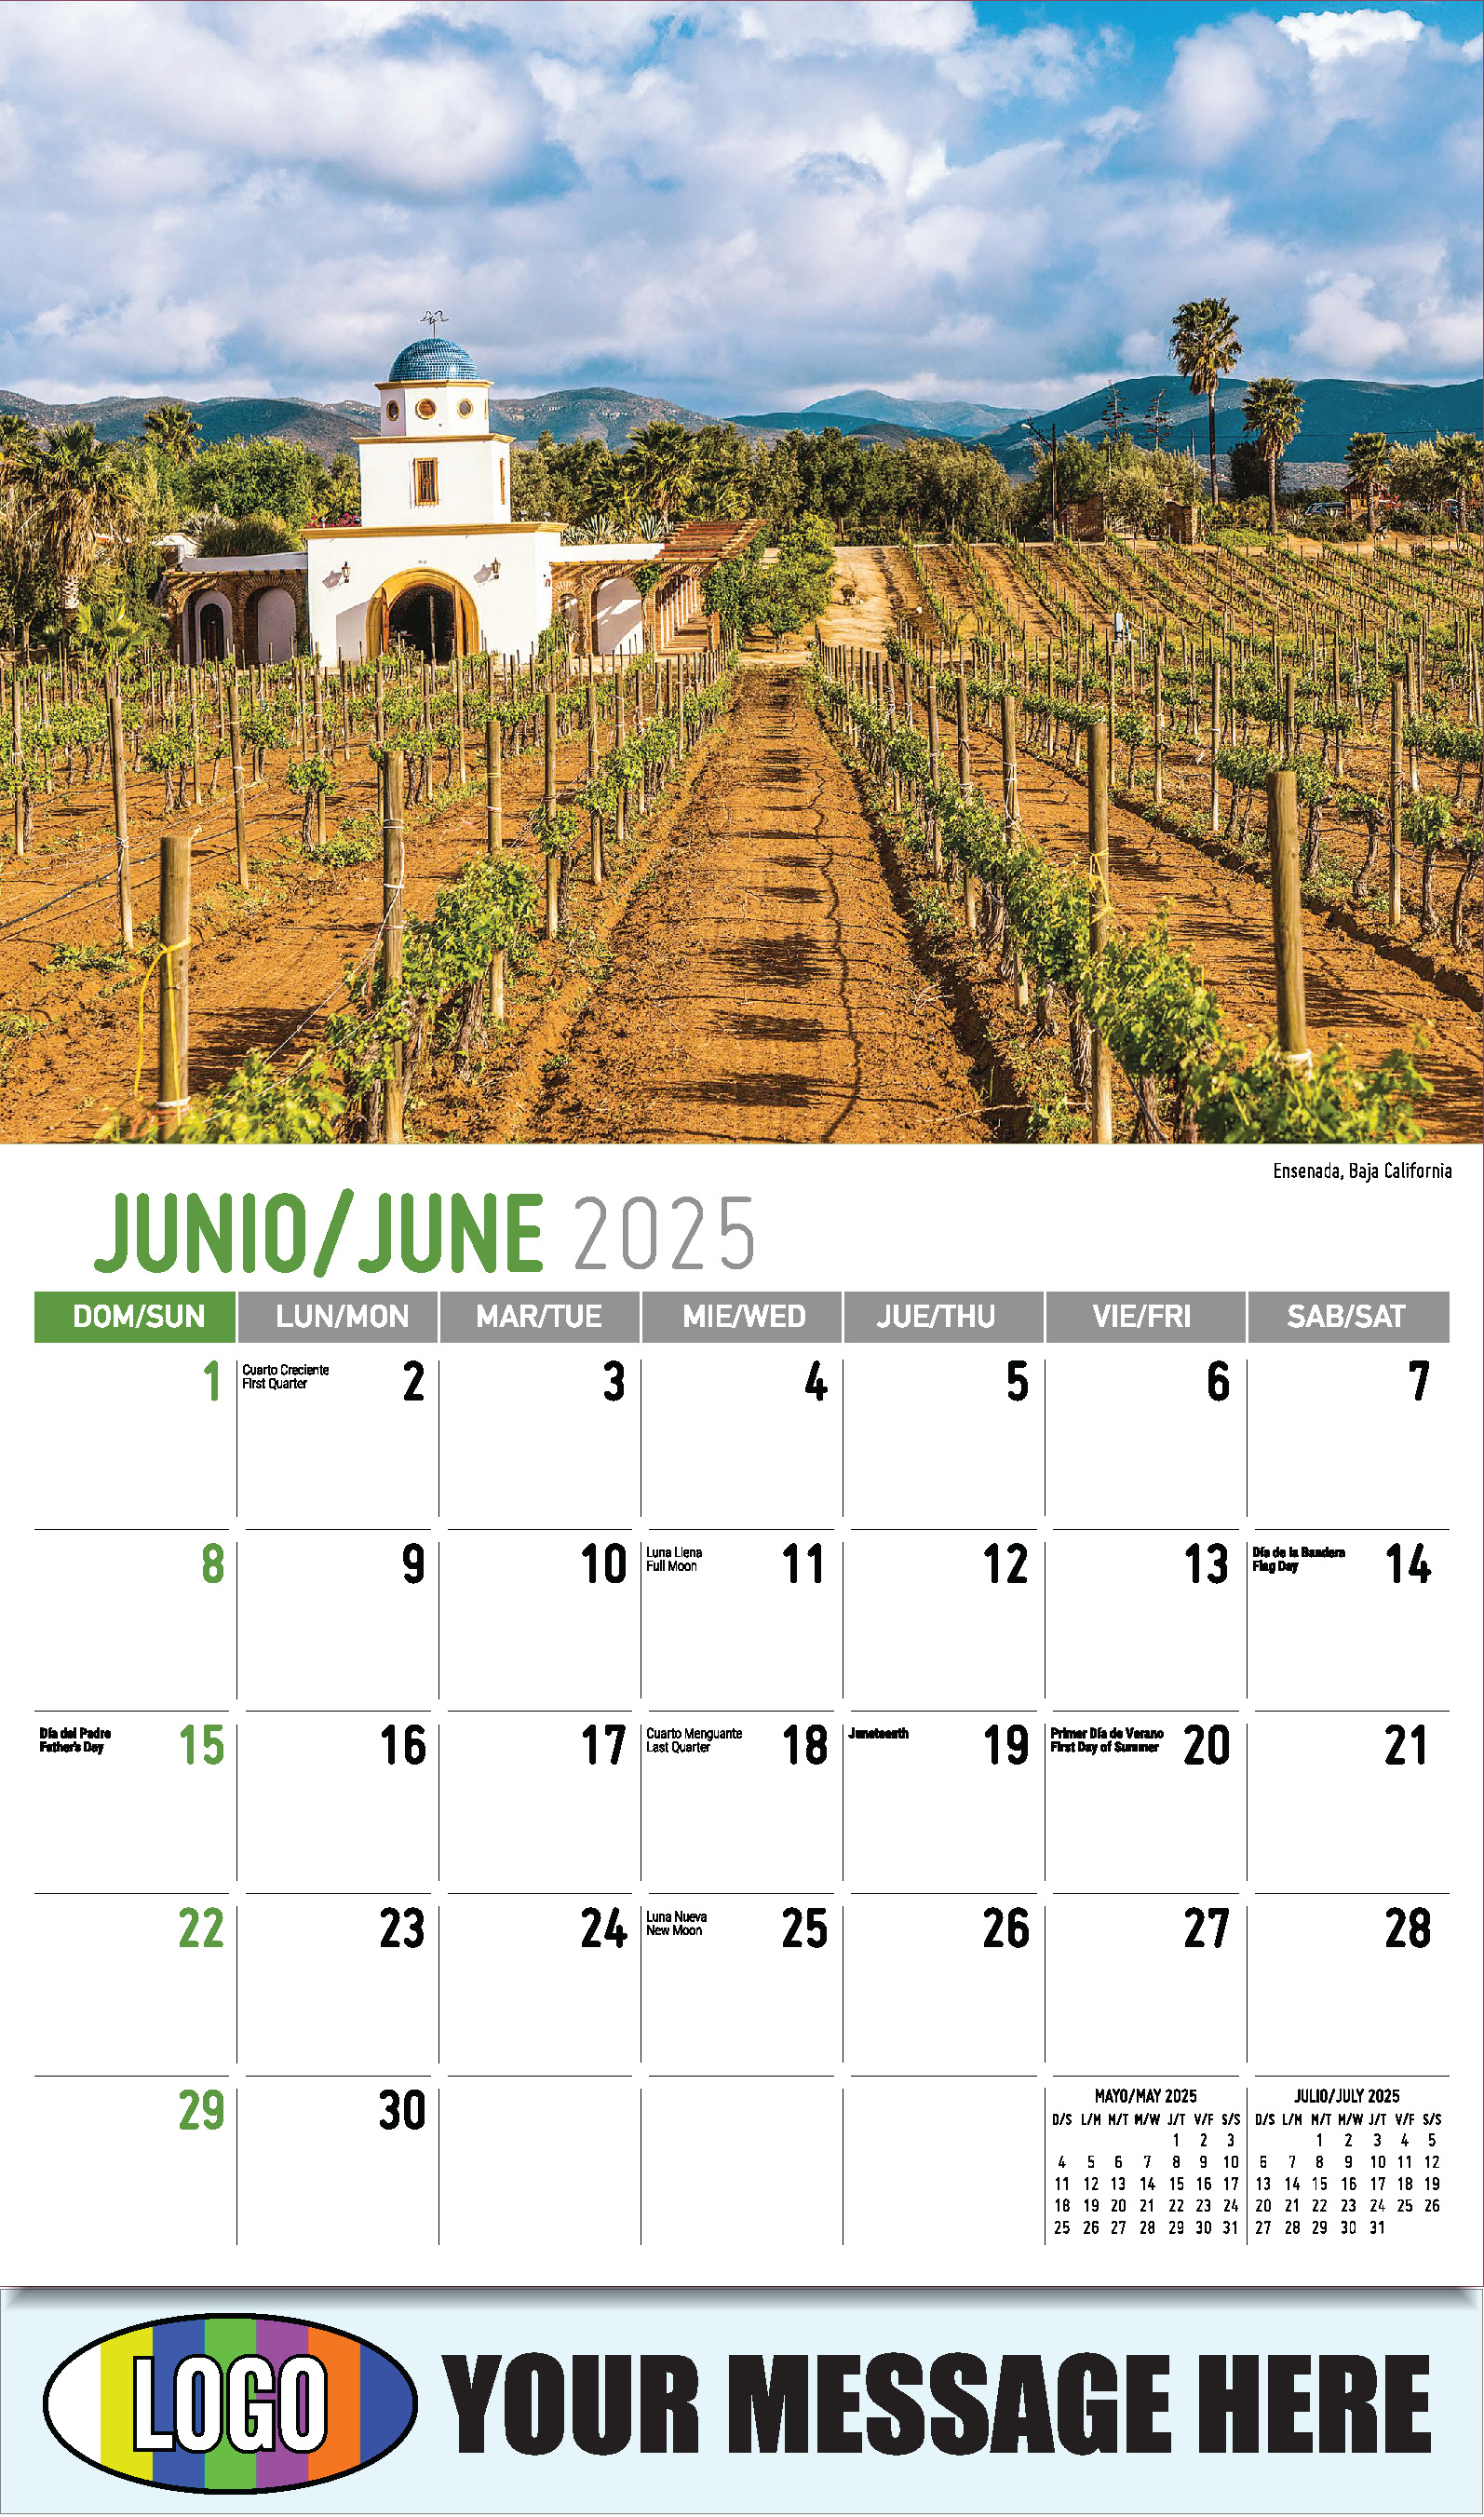 Scenes of Mexico 2025 Bilingual Business Promo Calendar - June